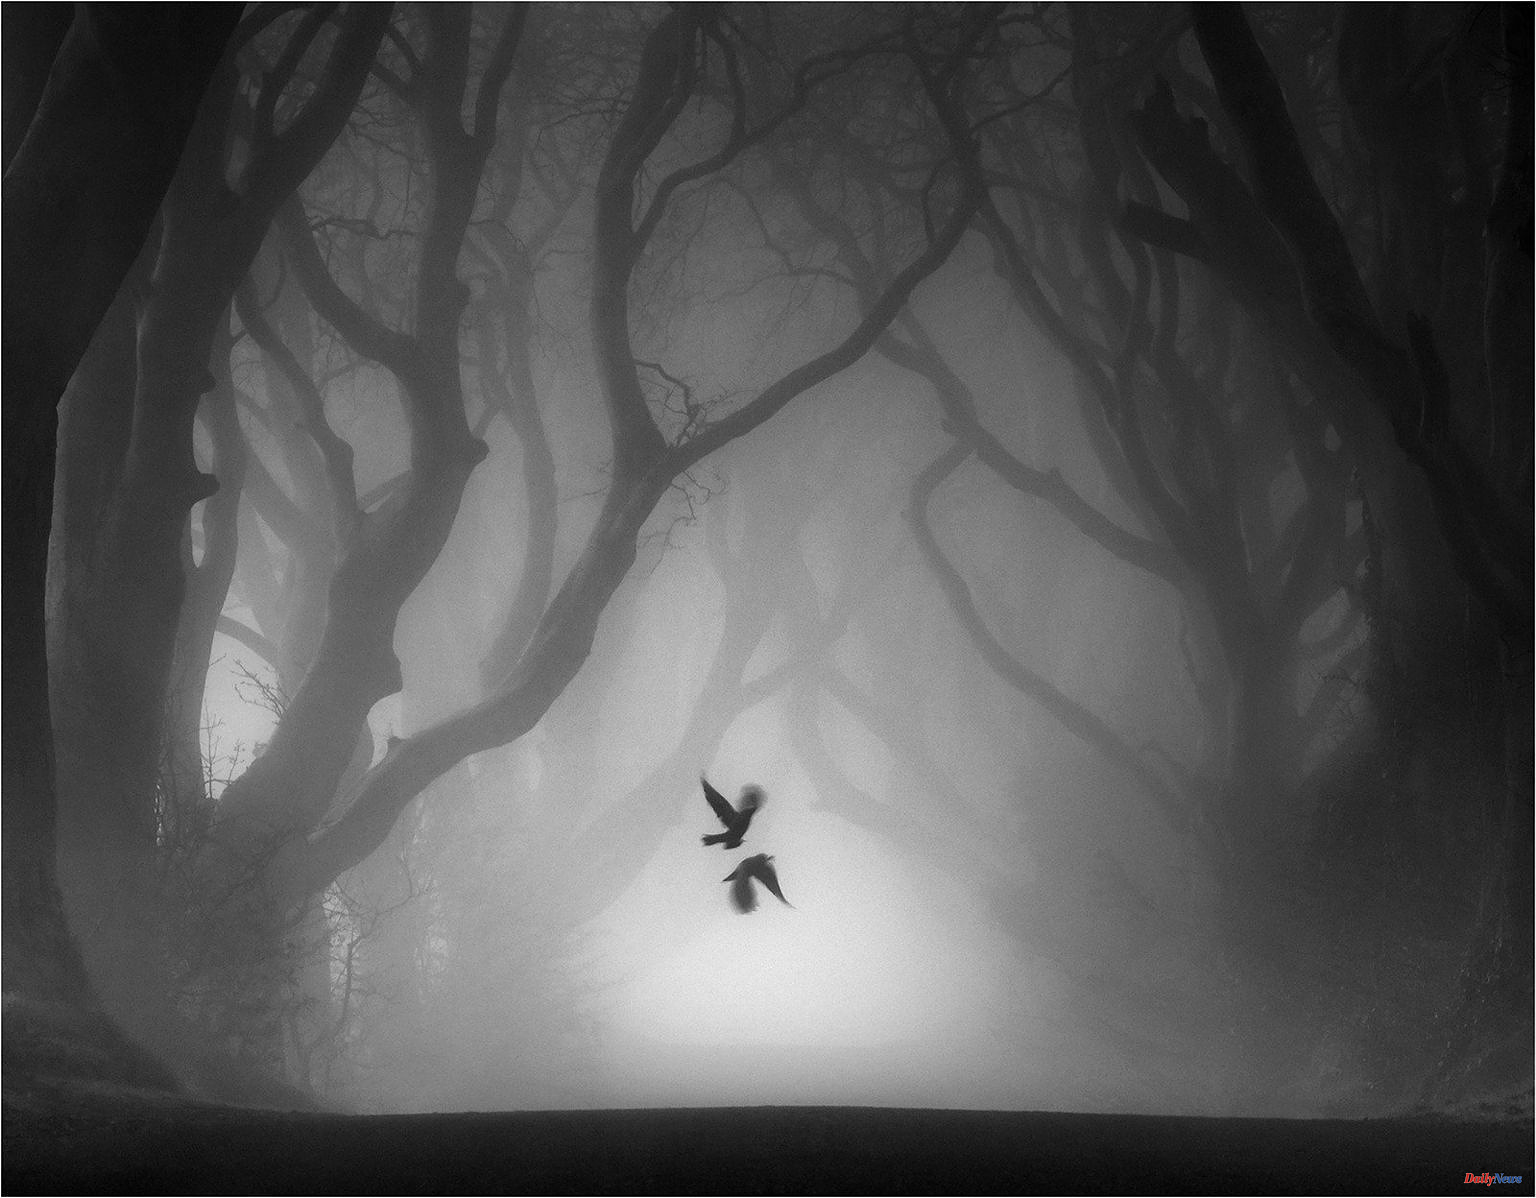 Belfast man's image of Dark Hedges wins the World Landscape Photographer competition